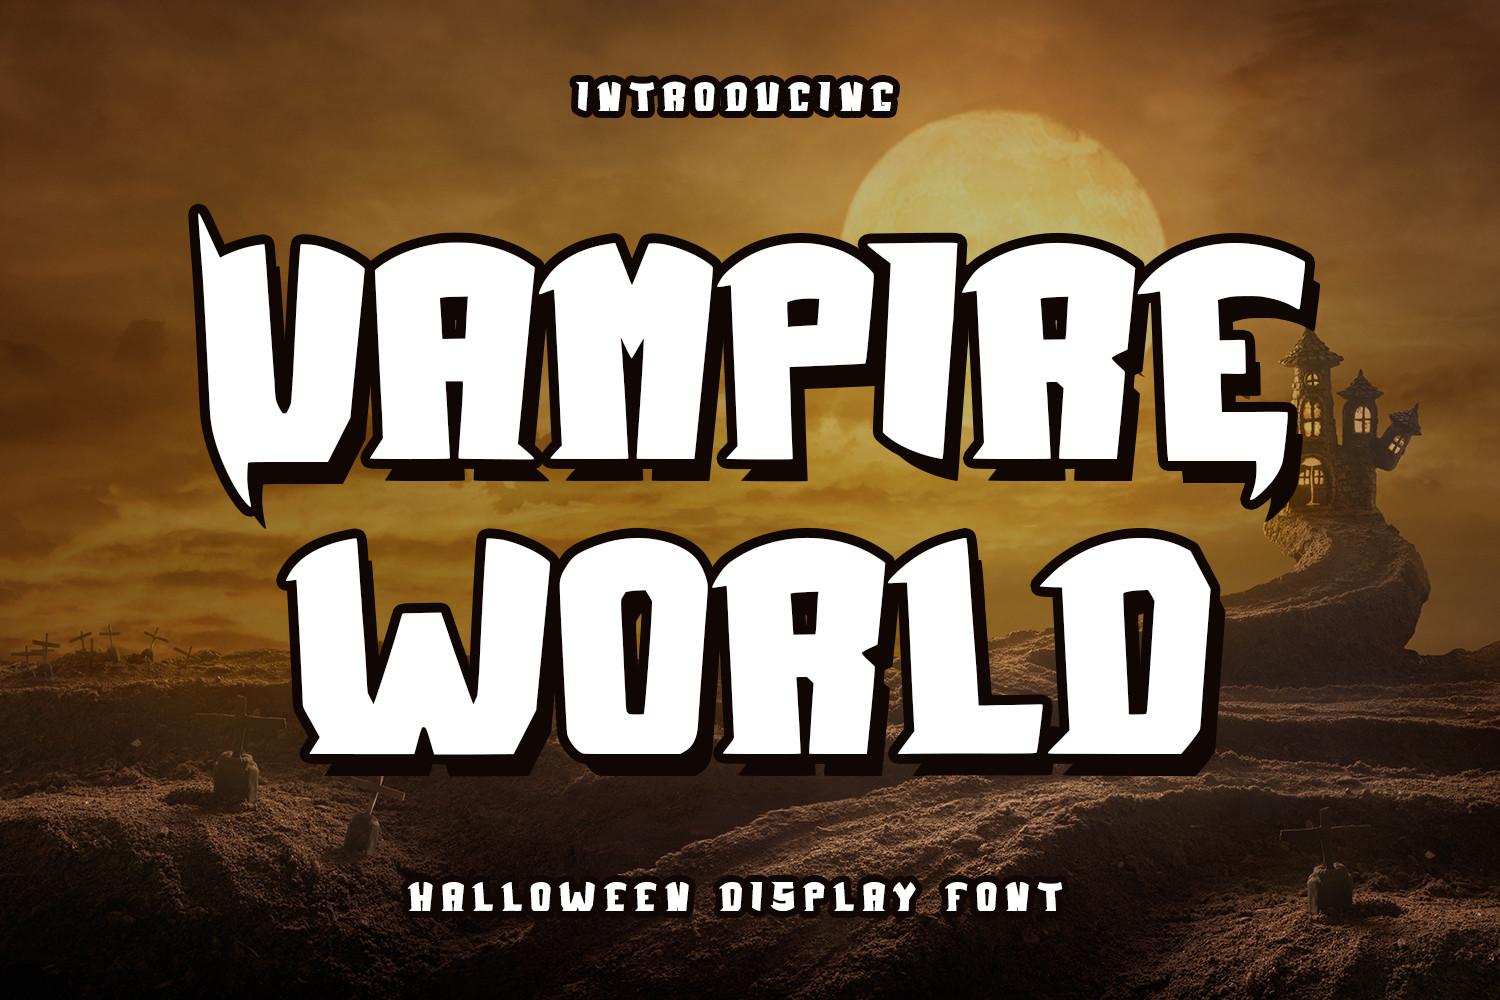 Vampire World Font